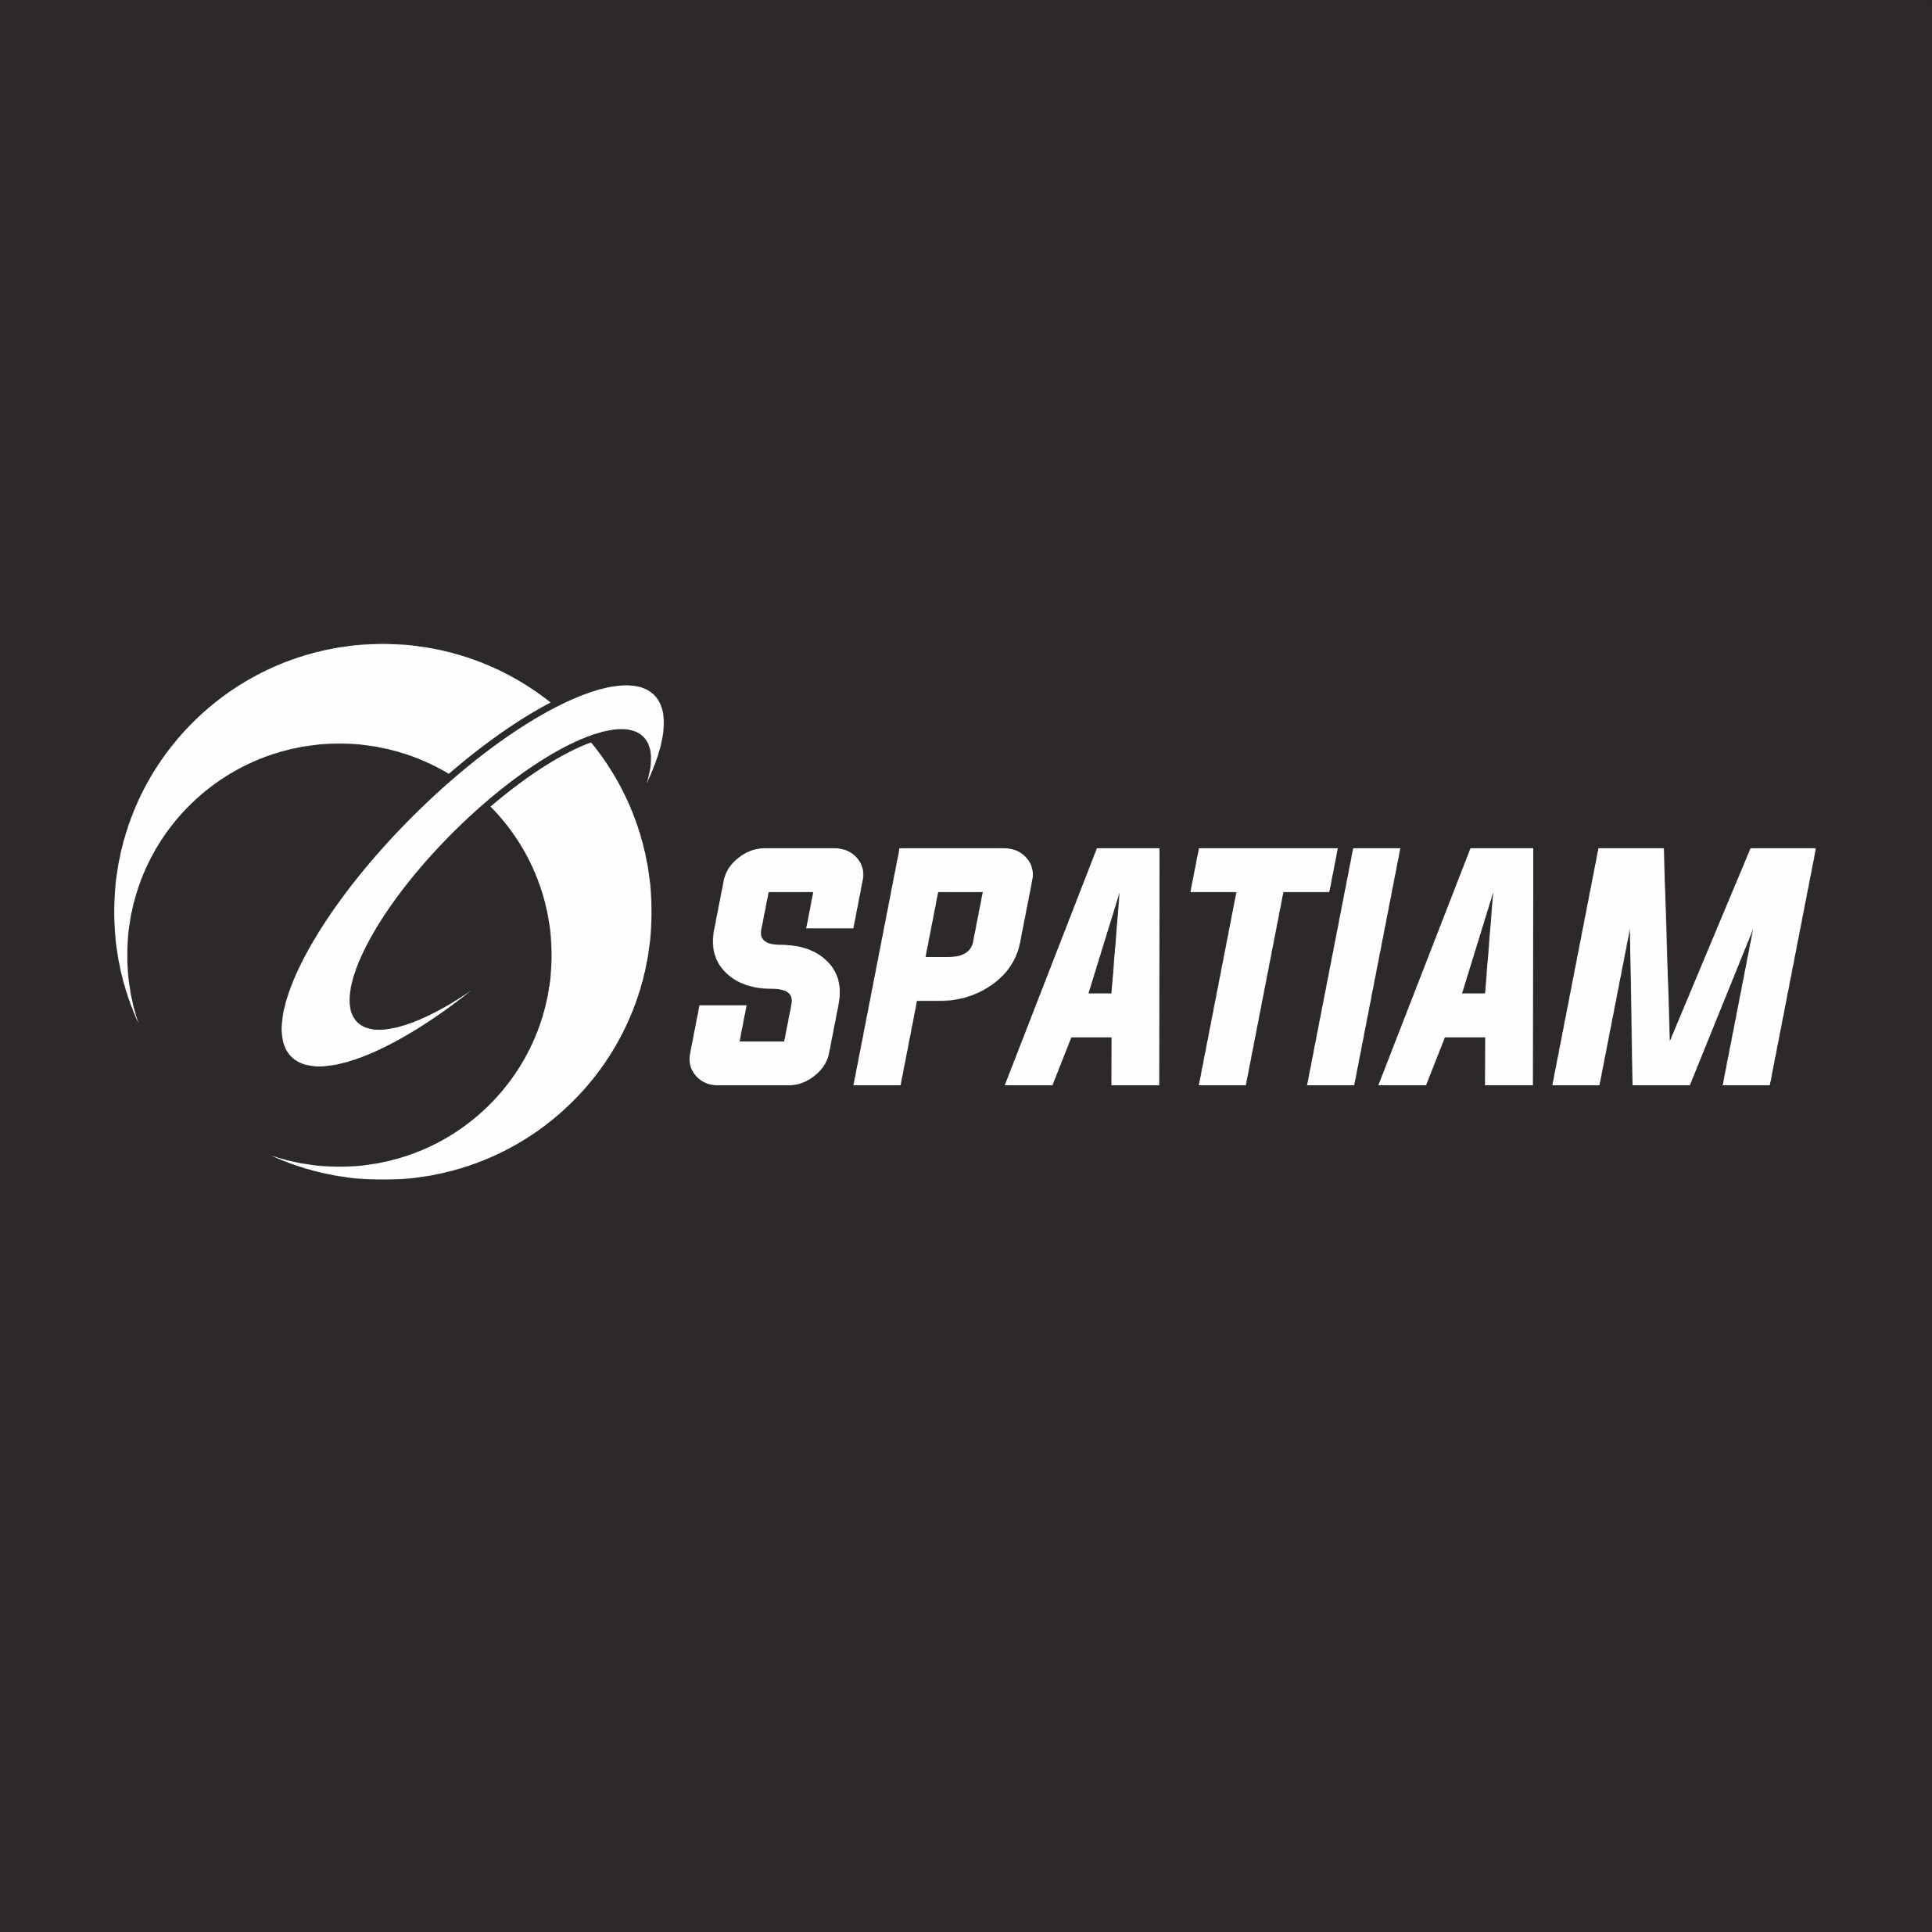 Spatiam Corporation Company Logo